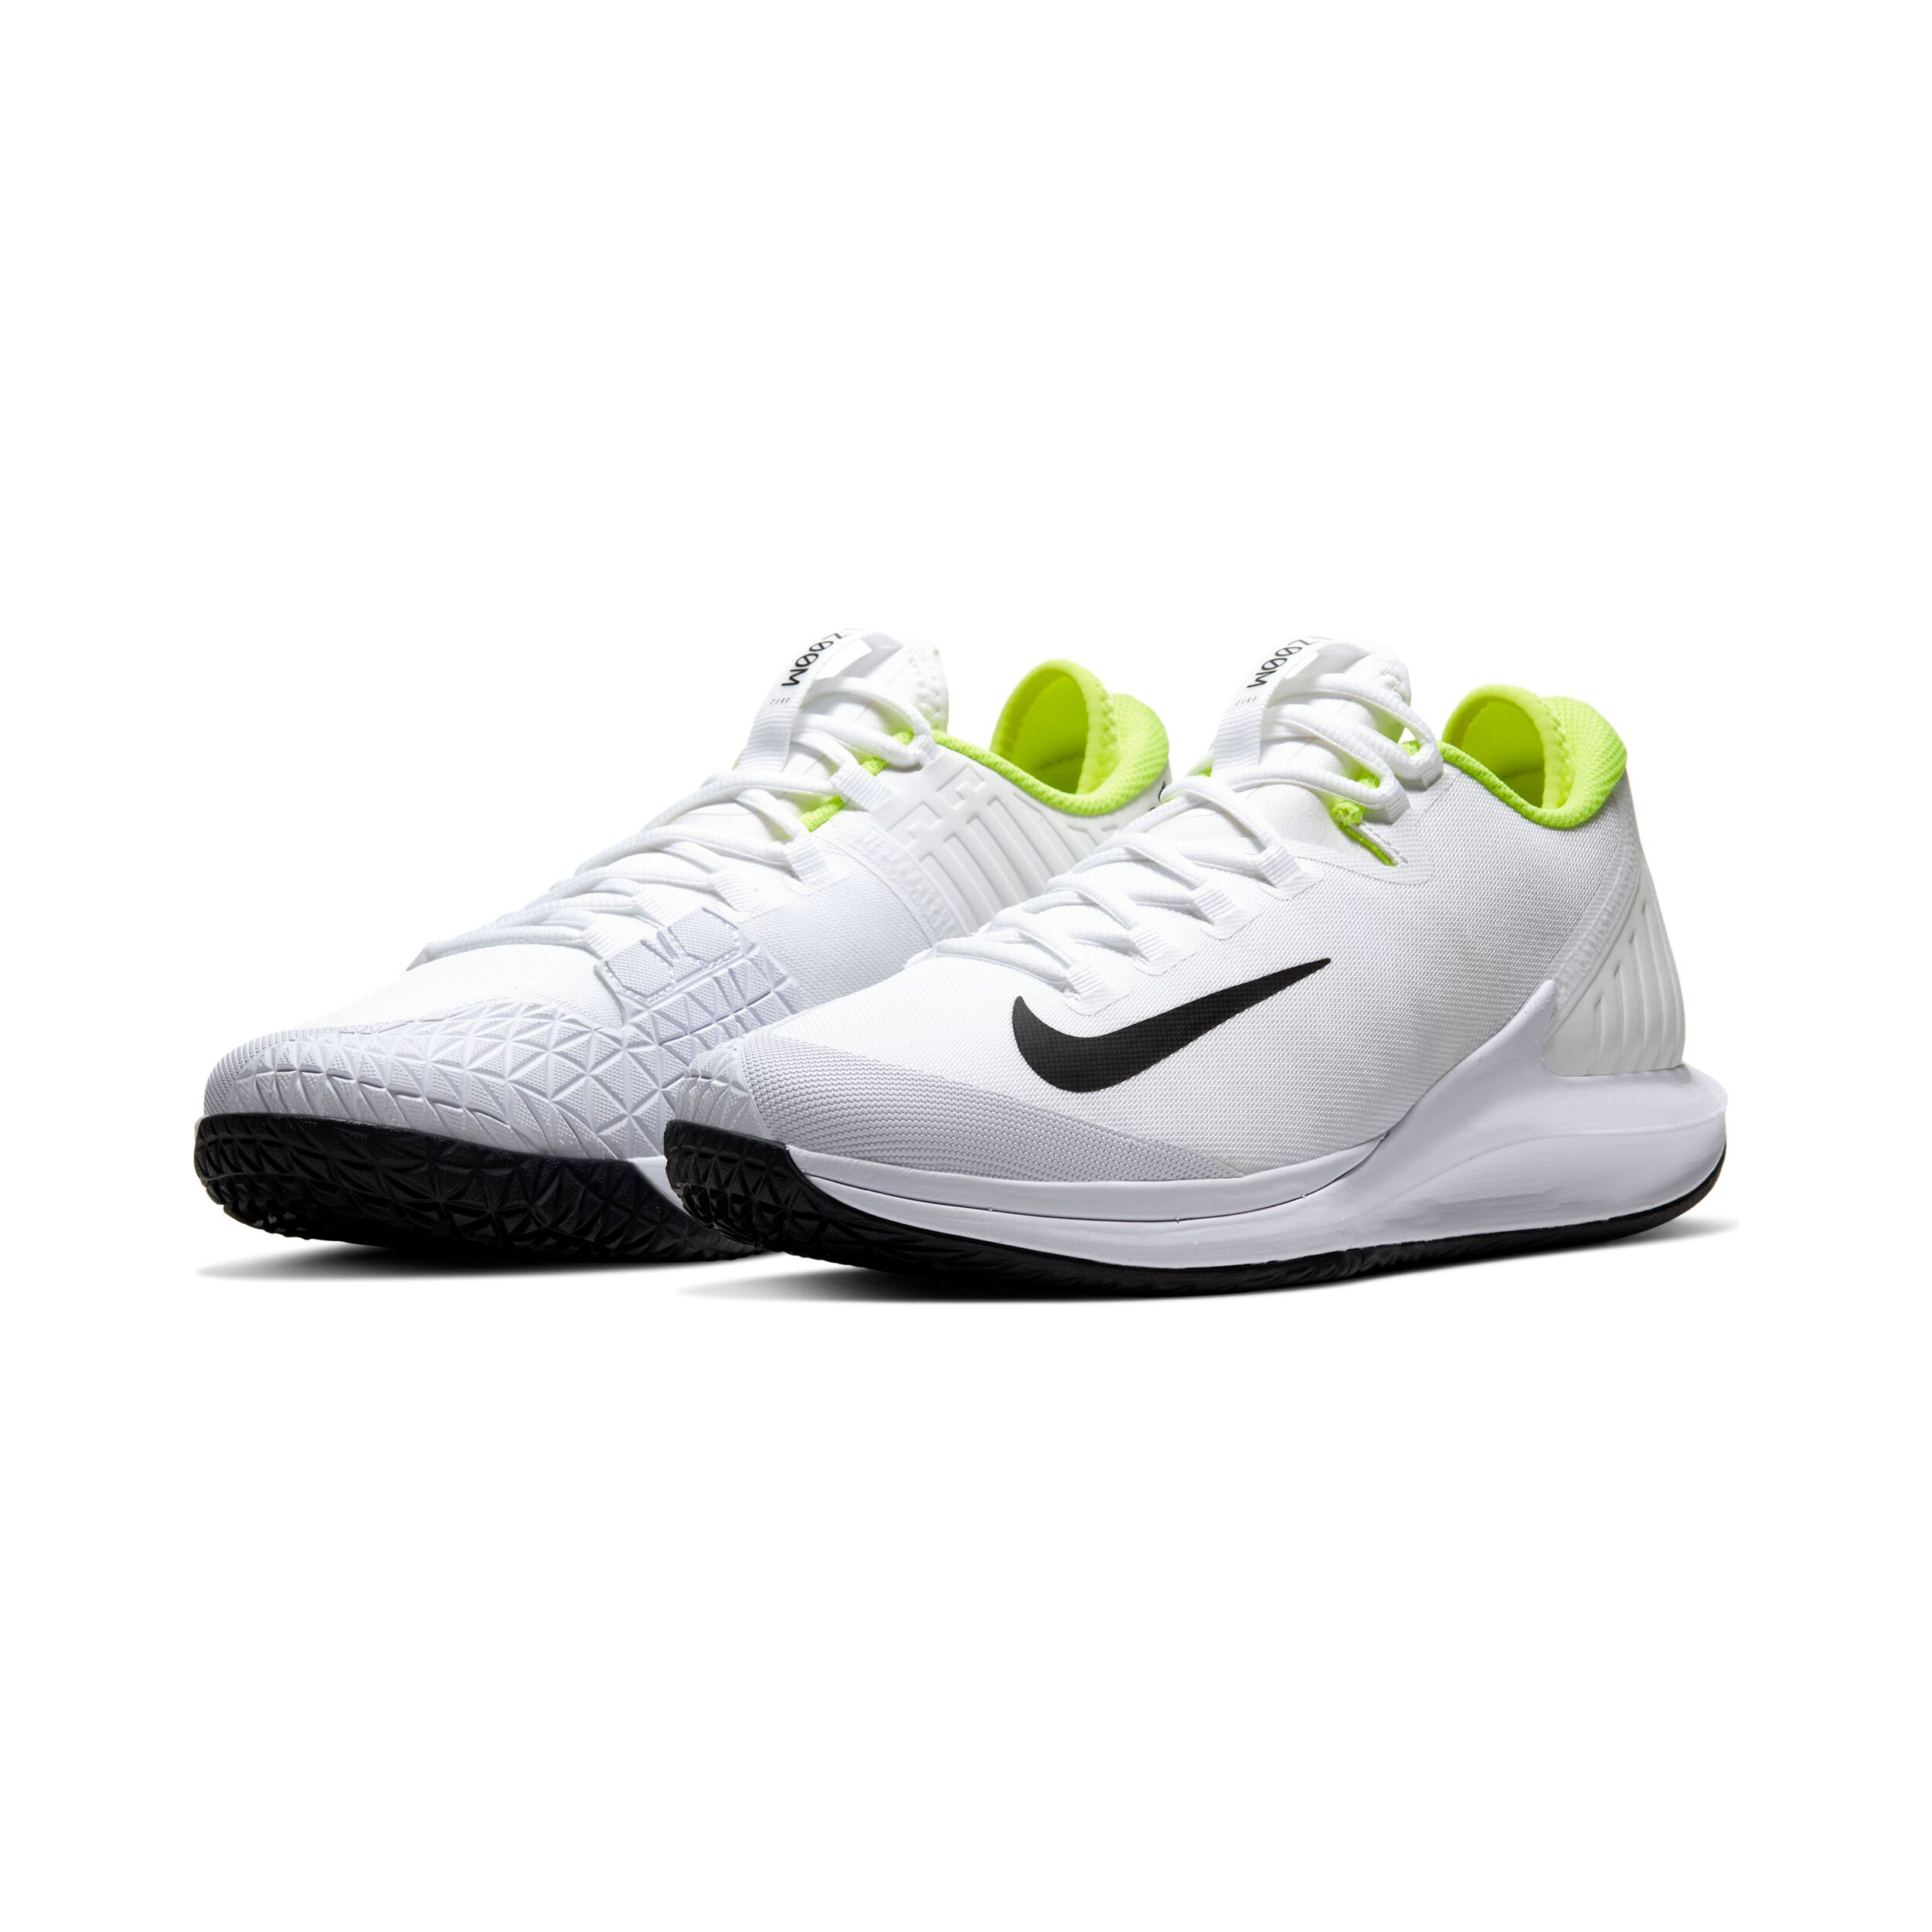 Air Zoom Zero Hard Court Shoe Men - White, Neon Green